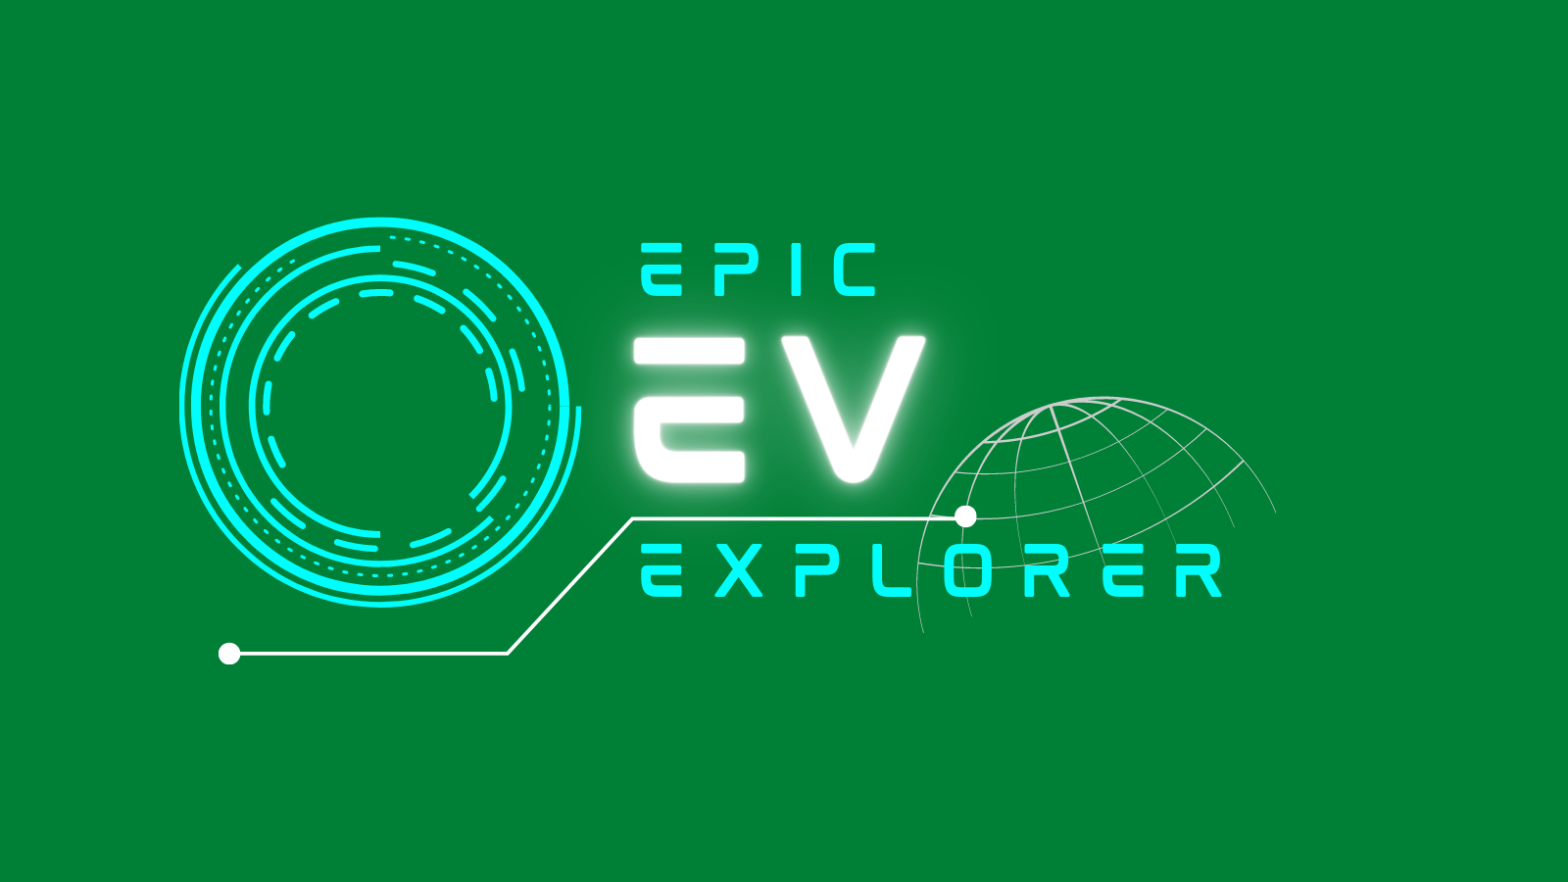 Epic EV Explorer logo